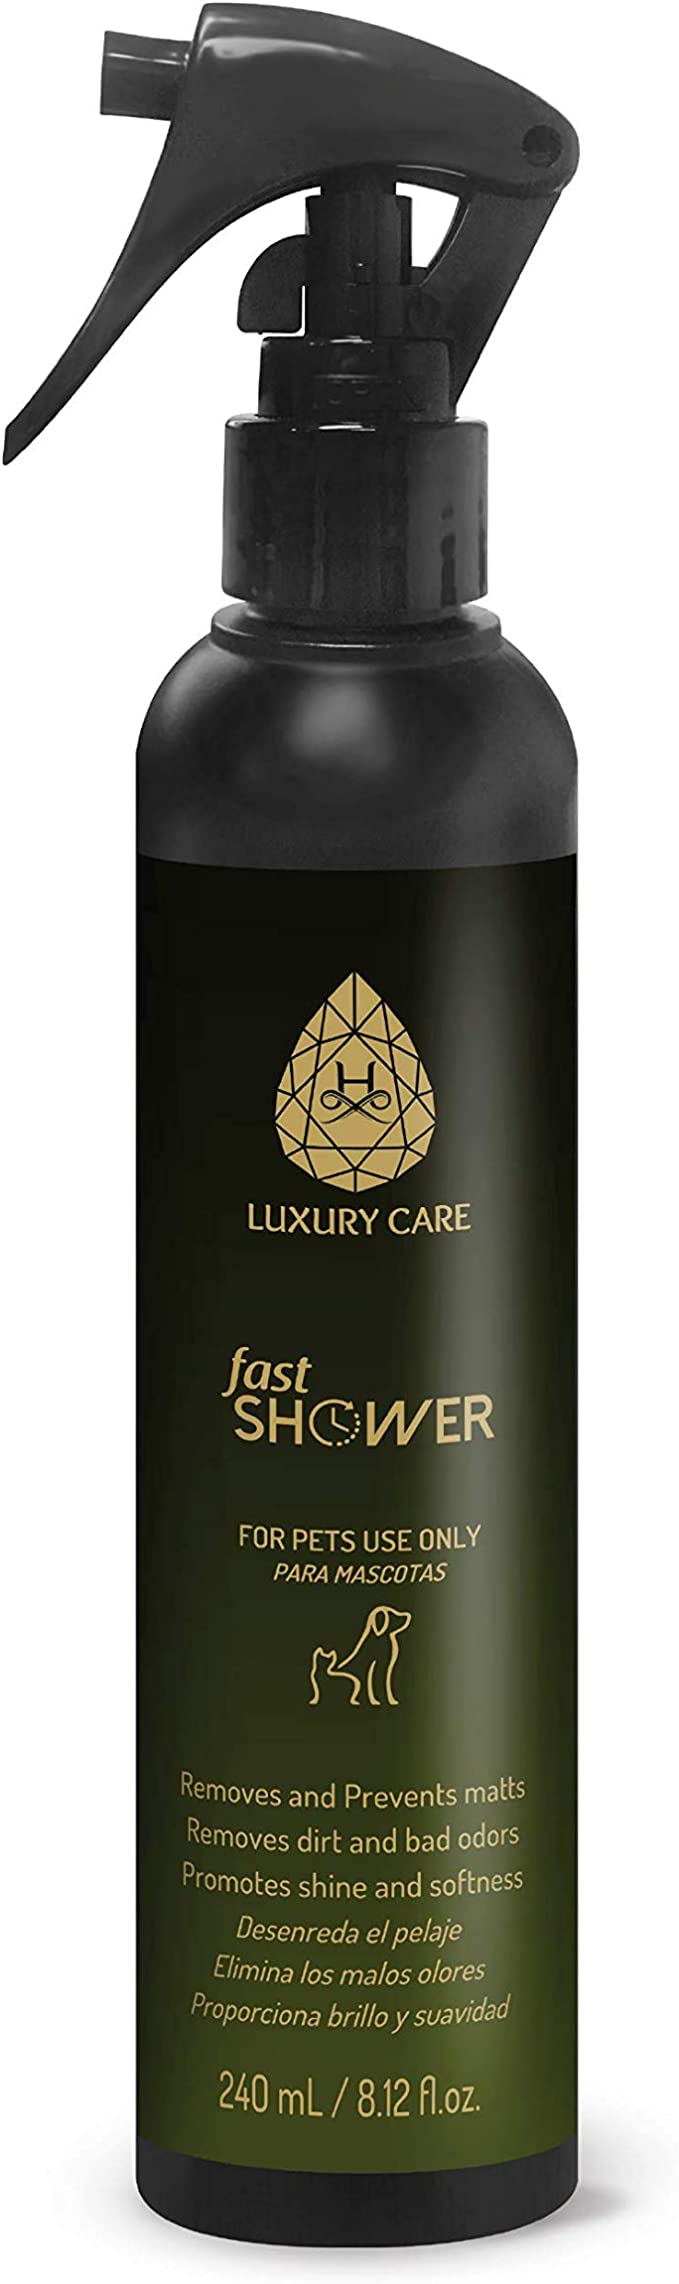 Hydra luxury care Fast Shower, 240ml